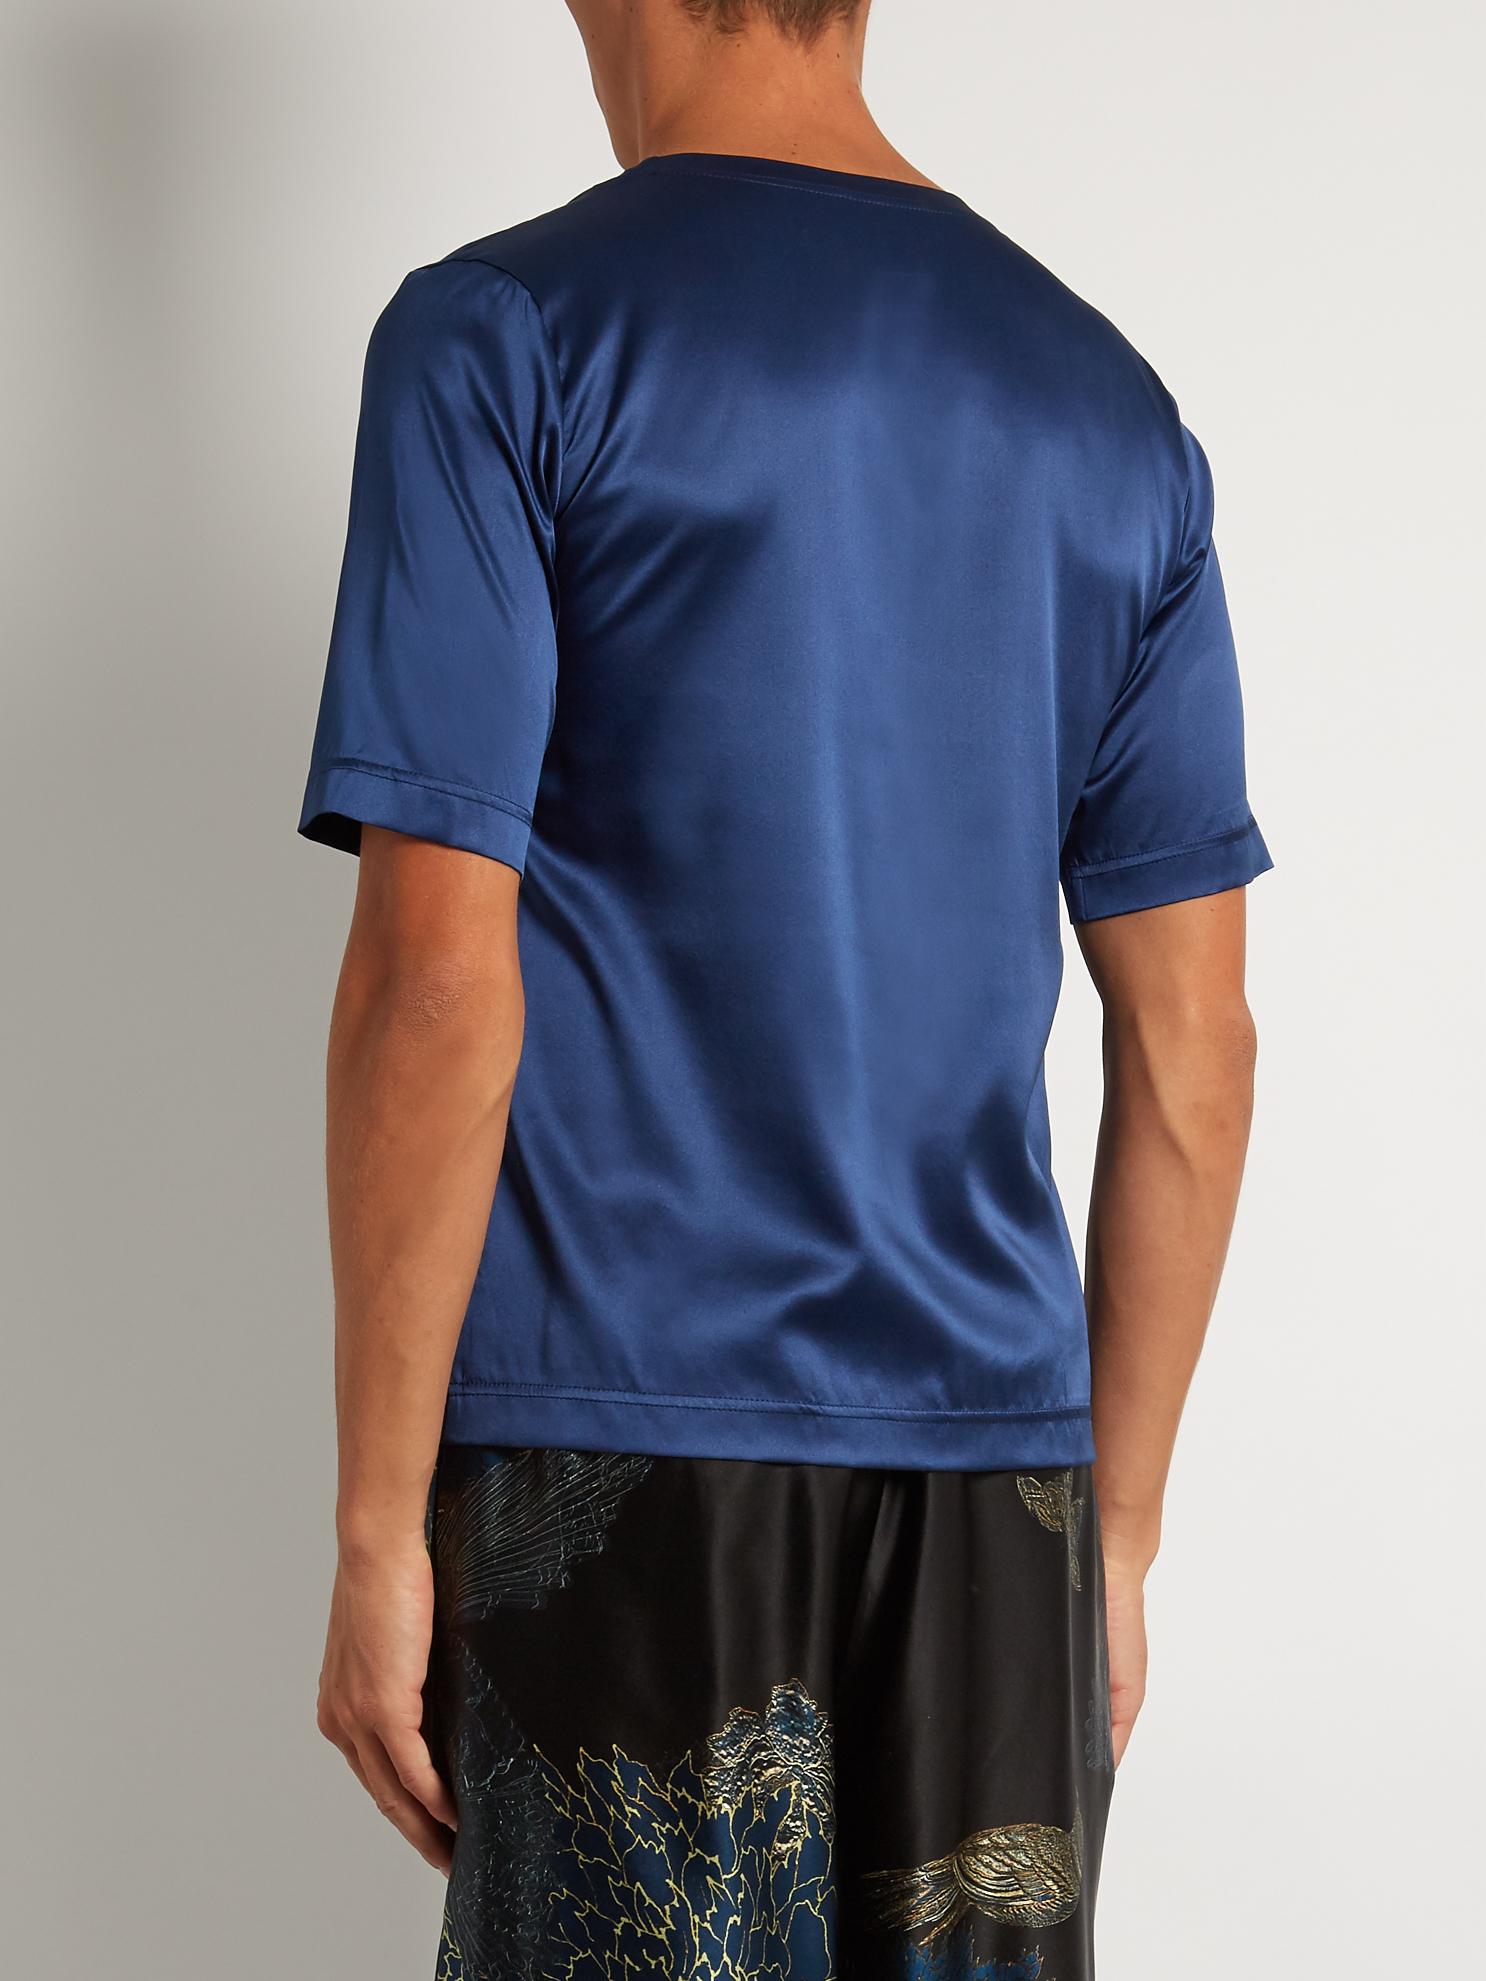 Meng Stretch Silk-satin T-shirt in Navy (Blue) for Men - Lyst